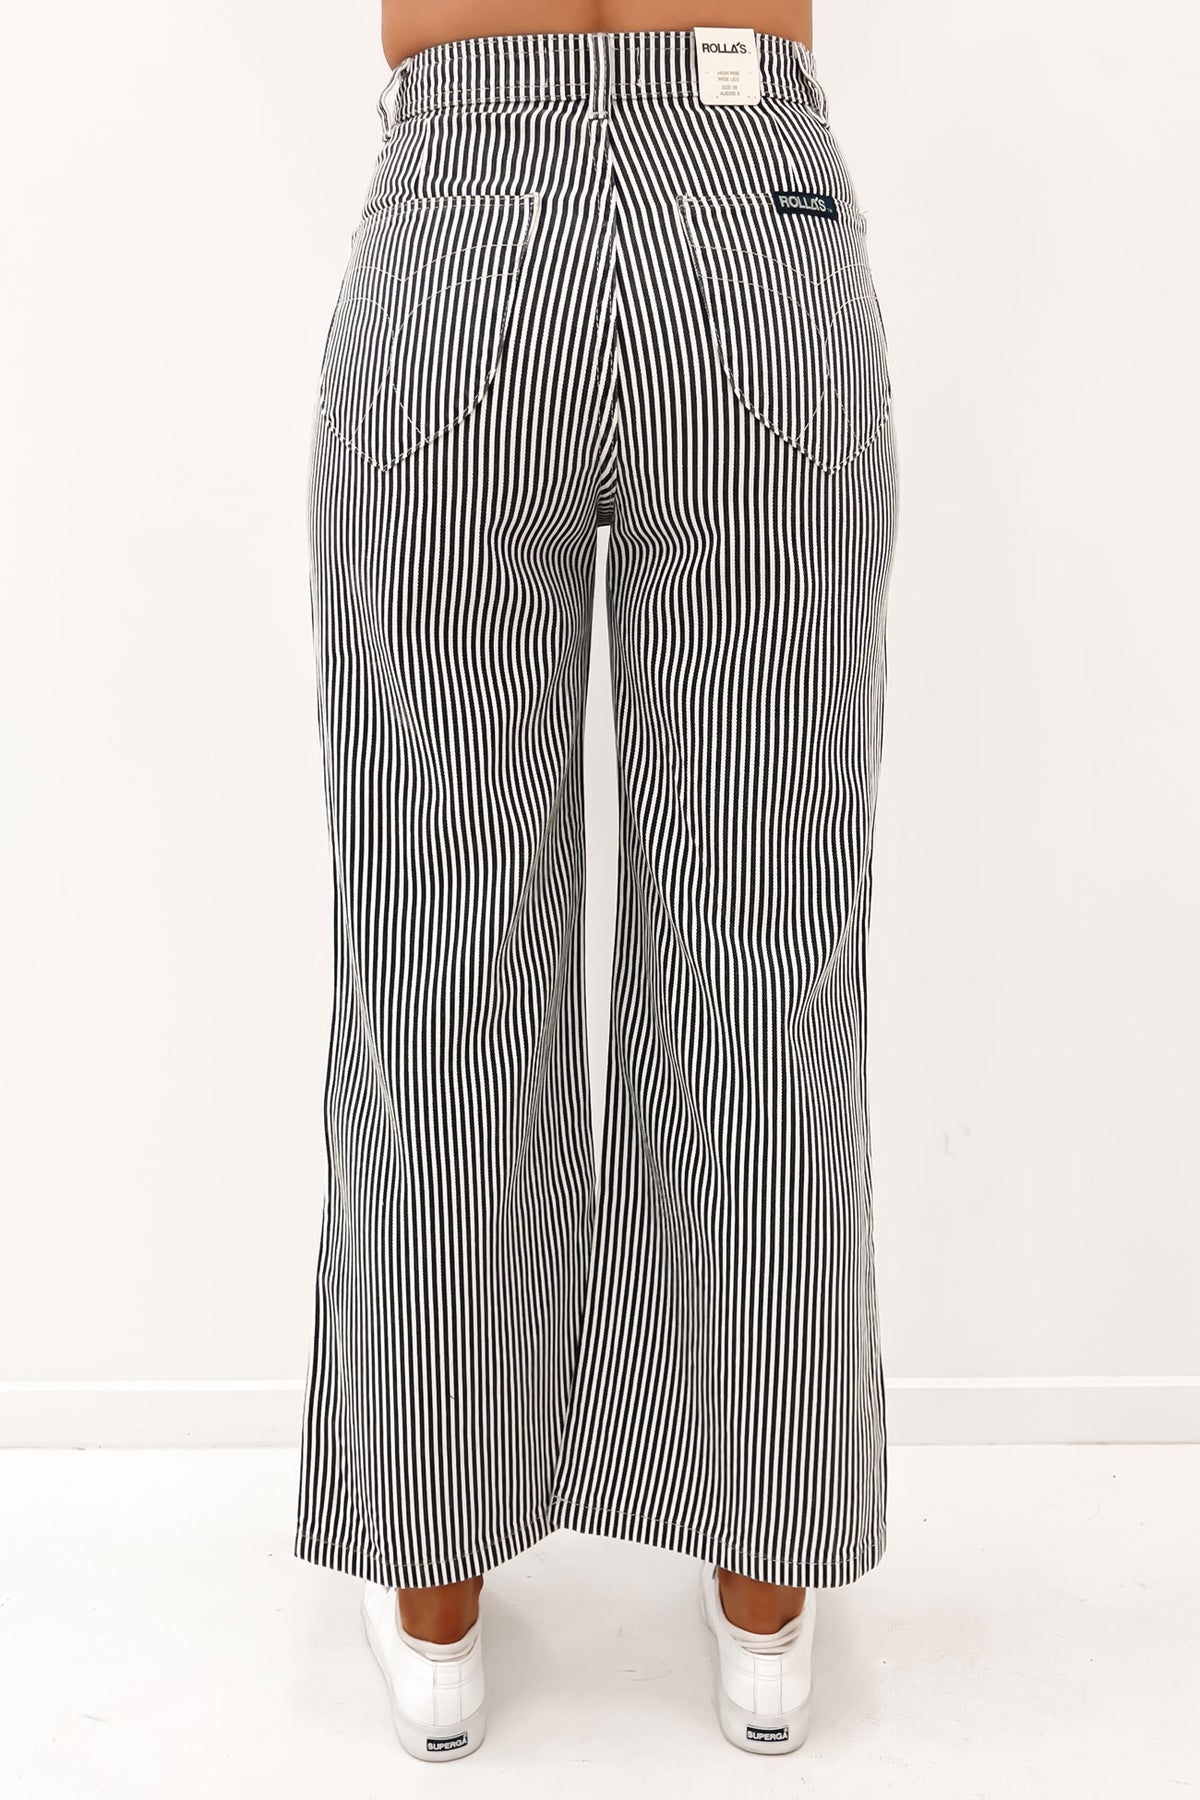 Rolla's Sailor Striped Jeans